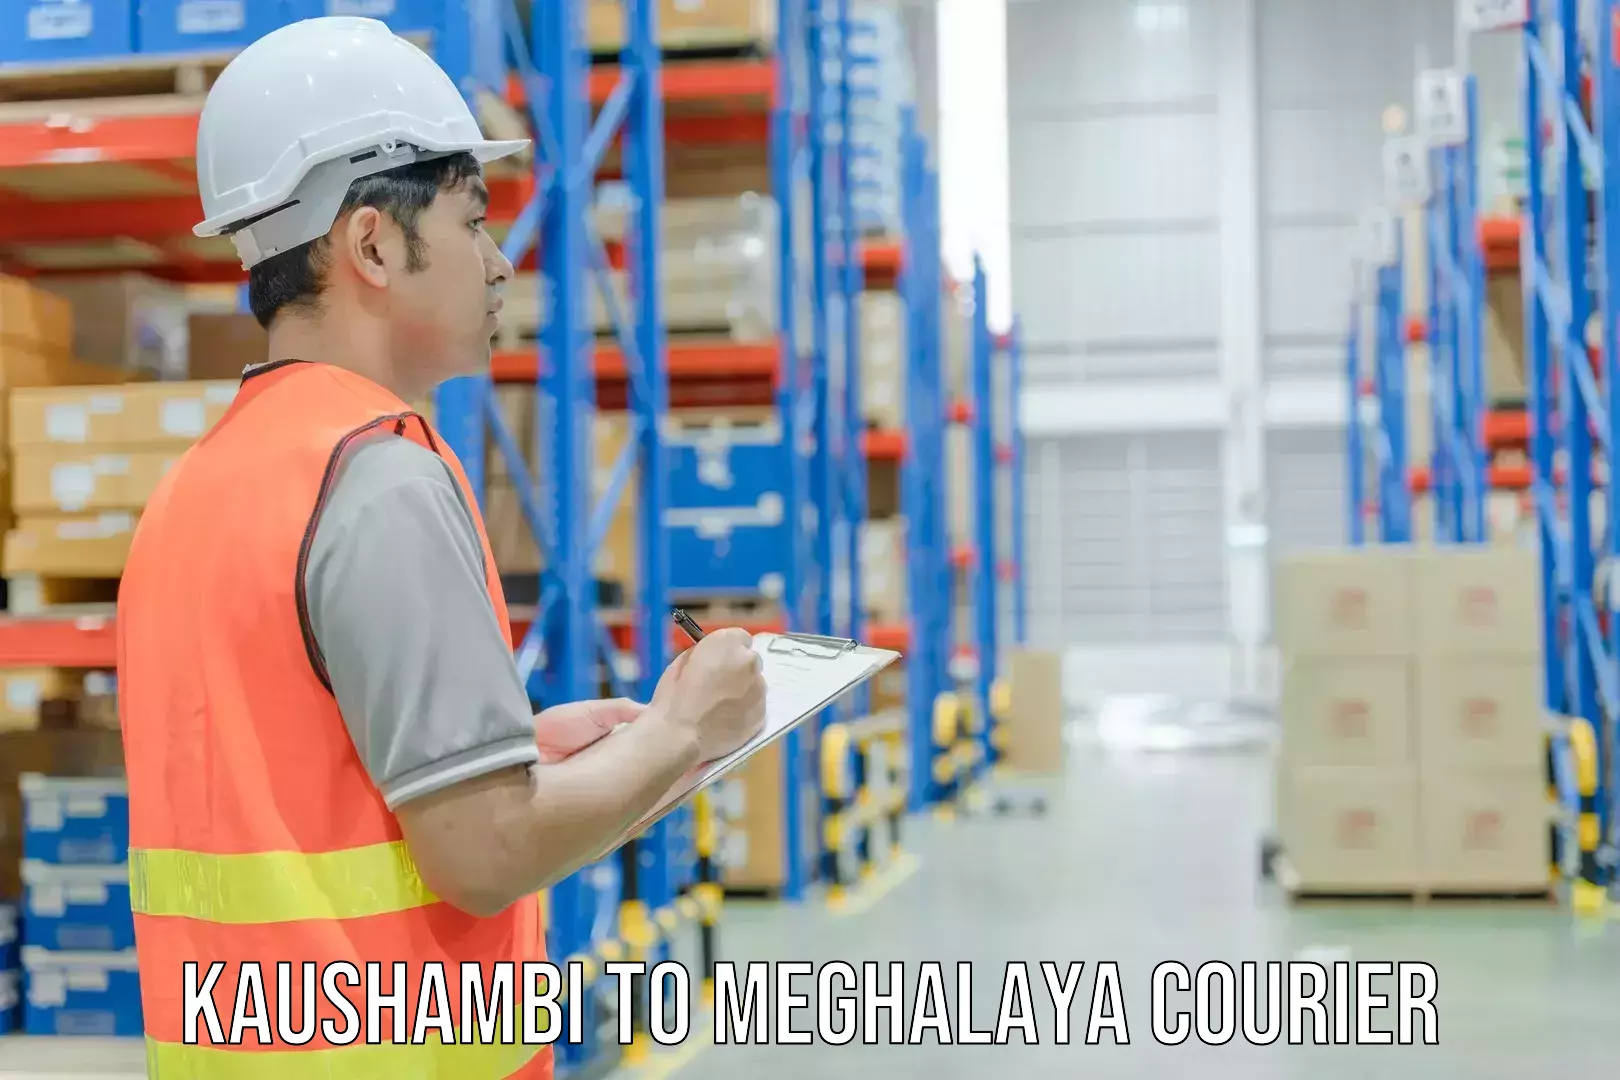 Courier service innovation Kaushambi to Meghalaya